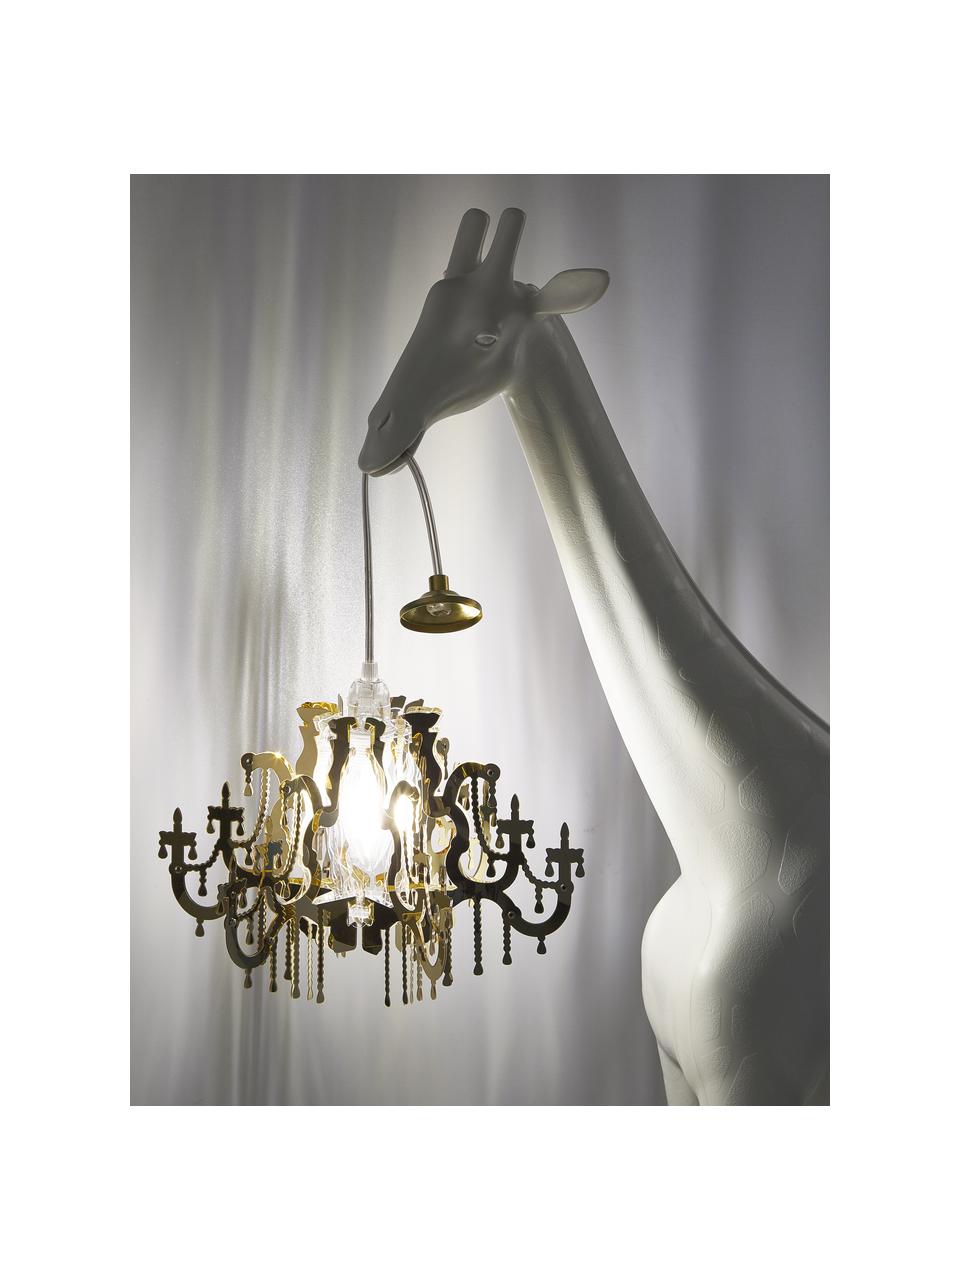 Malá designová stojací lampa Giraffe in Love, Bílá, zlatá